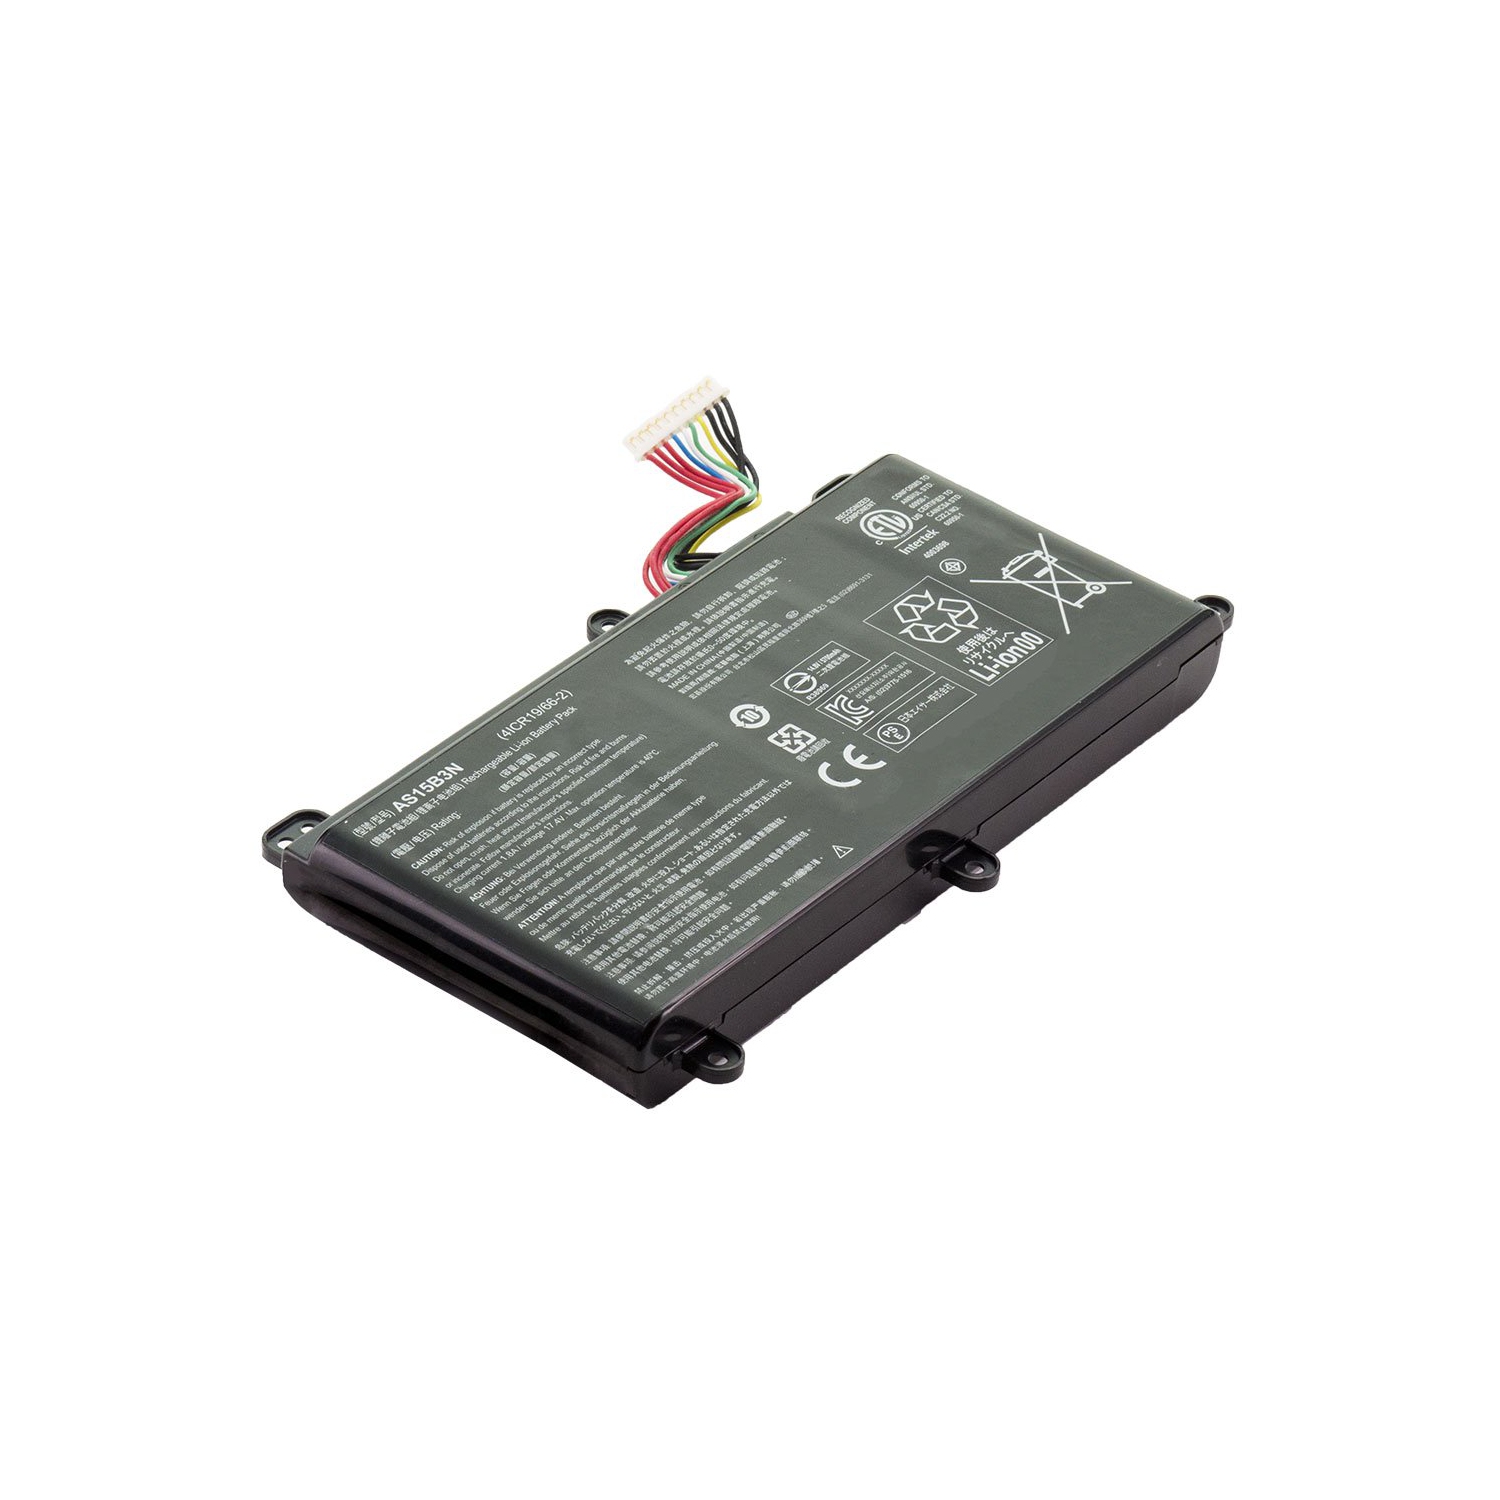 Laptop Battery Replacement for Acer Predator 15 G9-591-79KE, AS15B3N, KT.00803.004, KT.00803.005